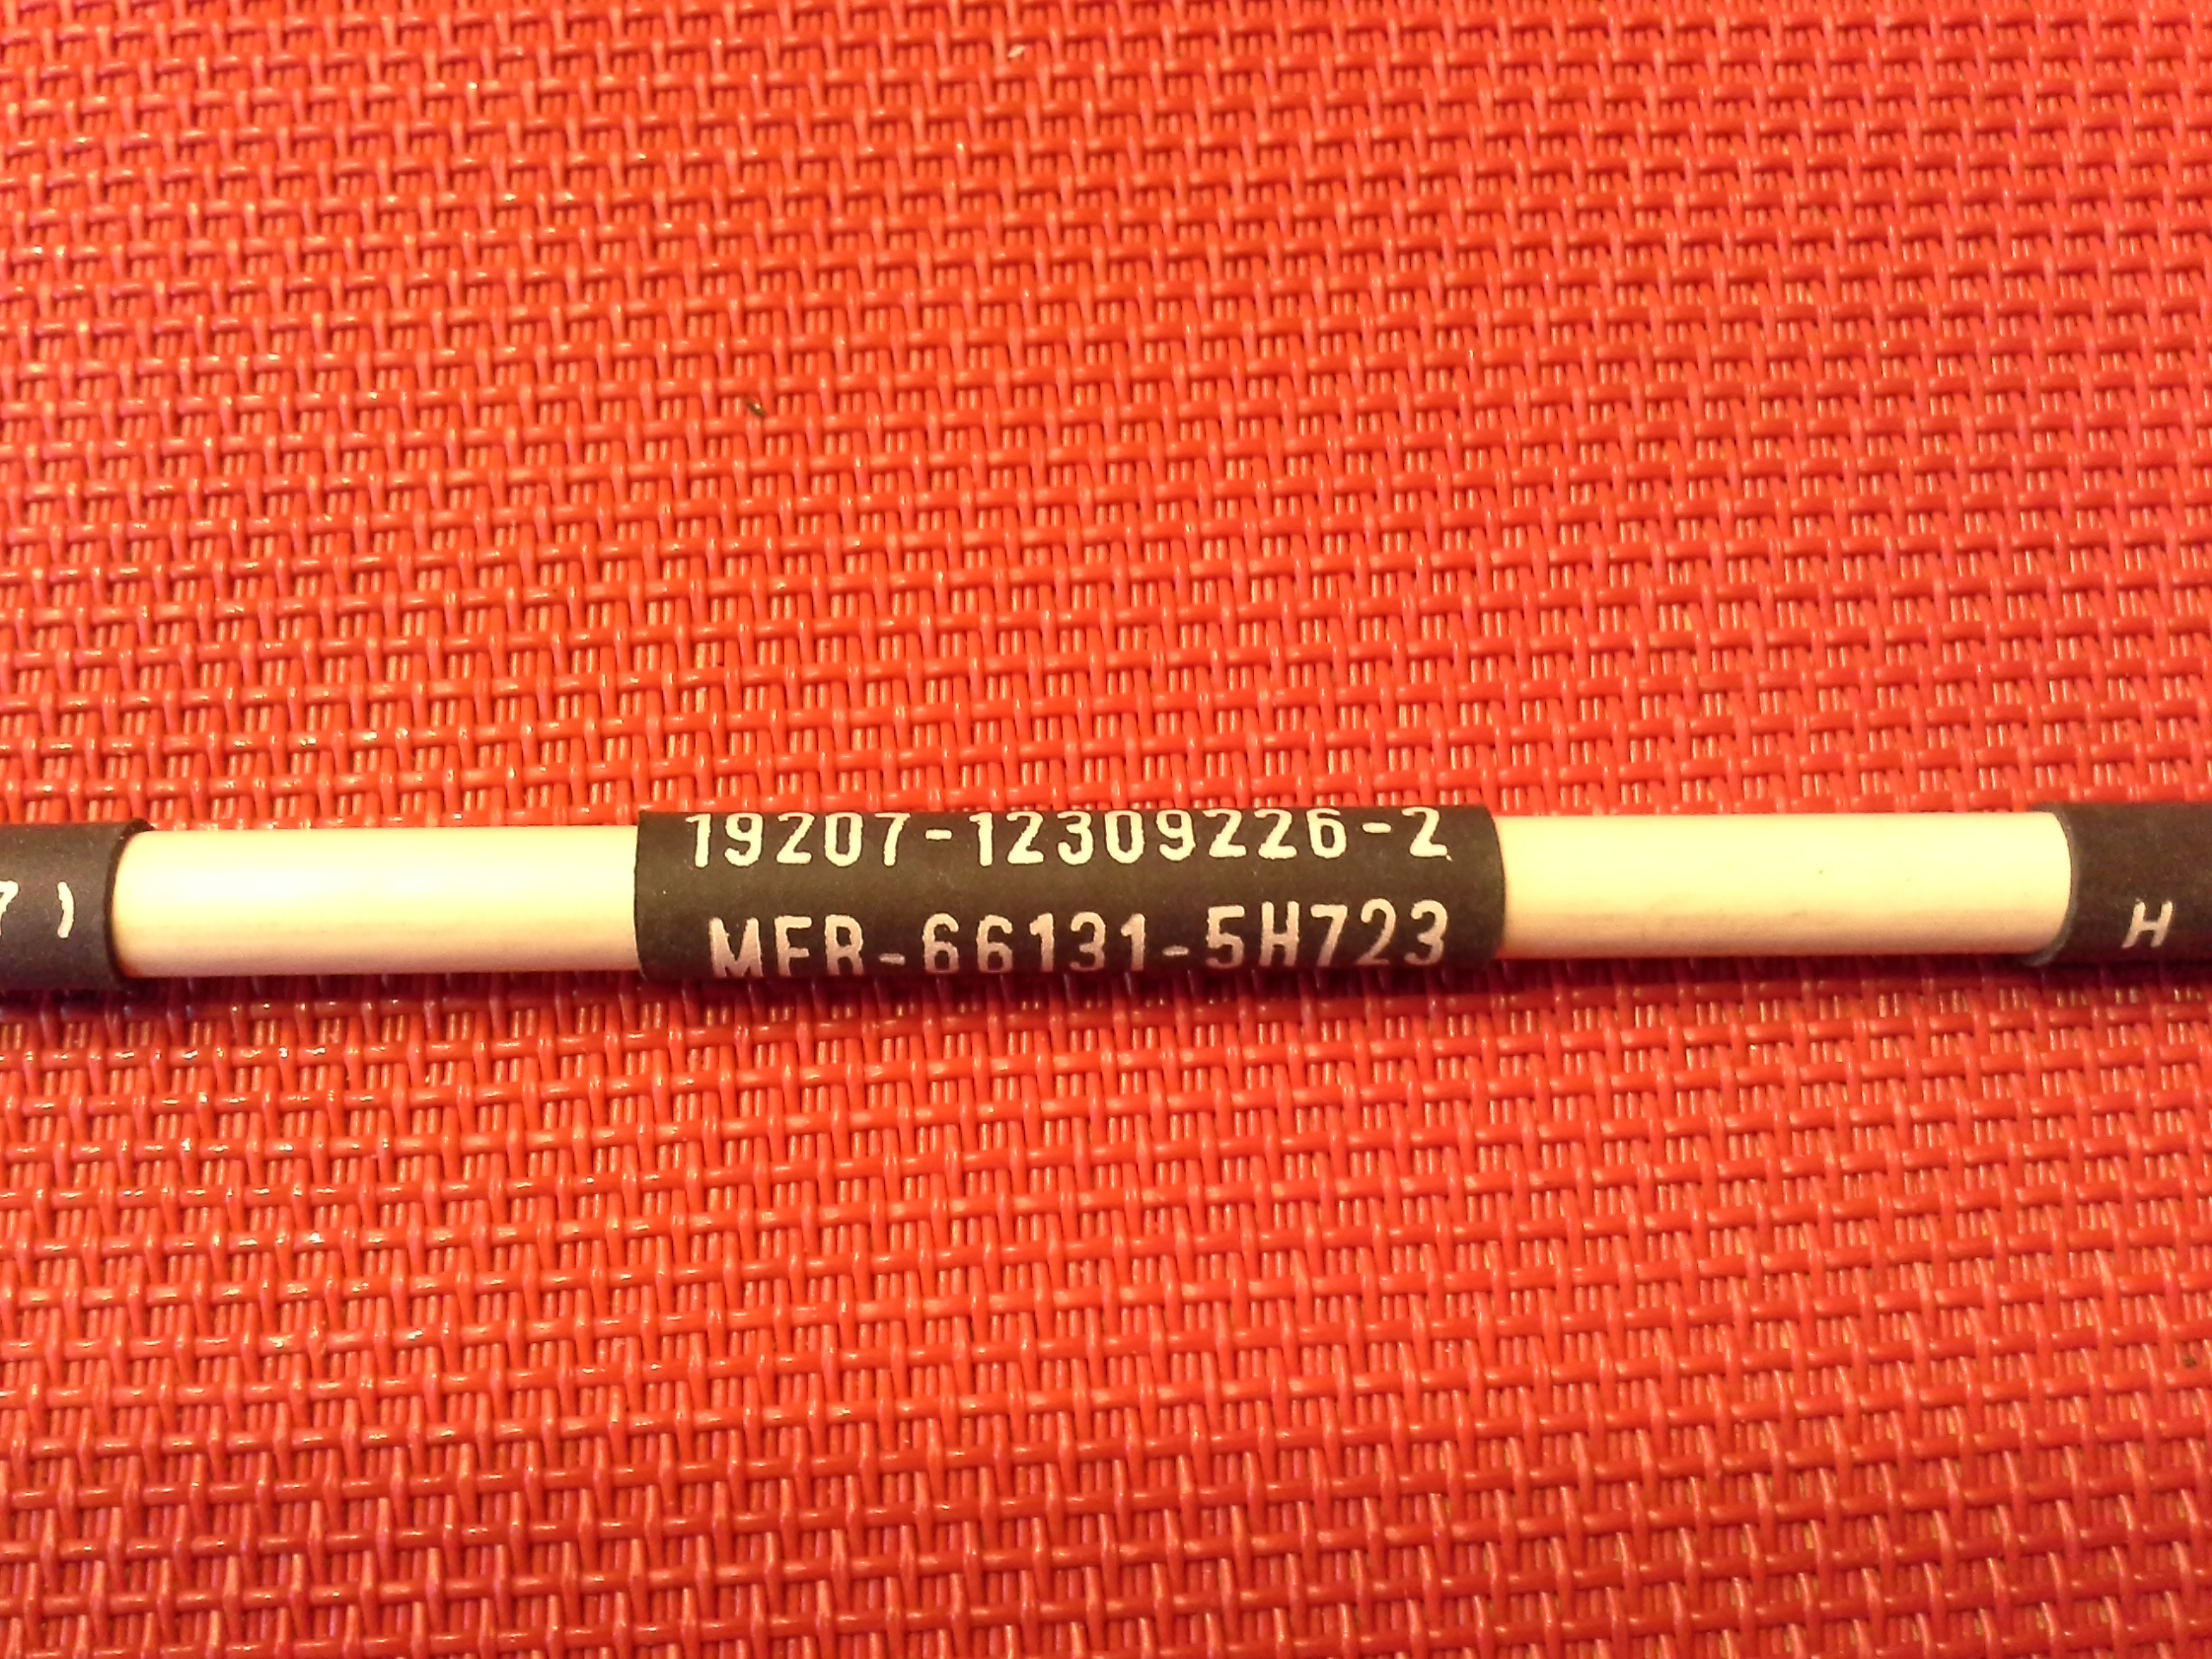 Erdungskabel MFR-66131-5H723 - Länge 220 mm